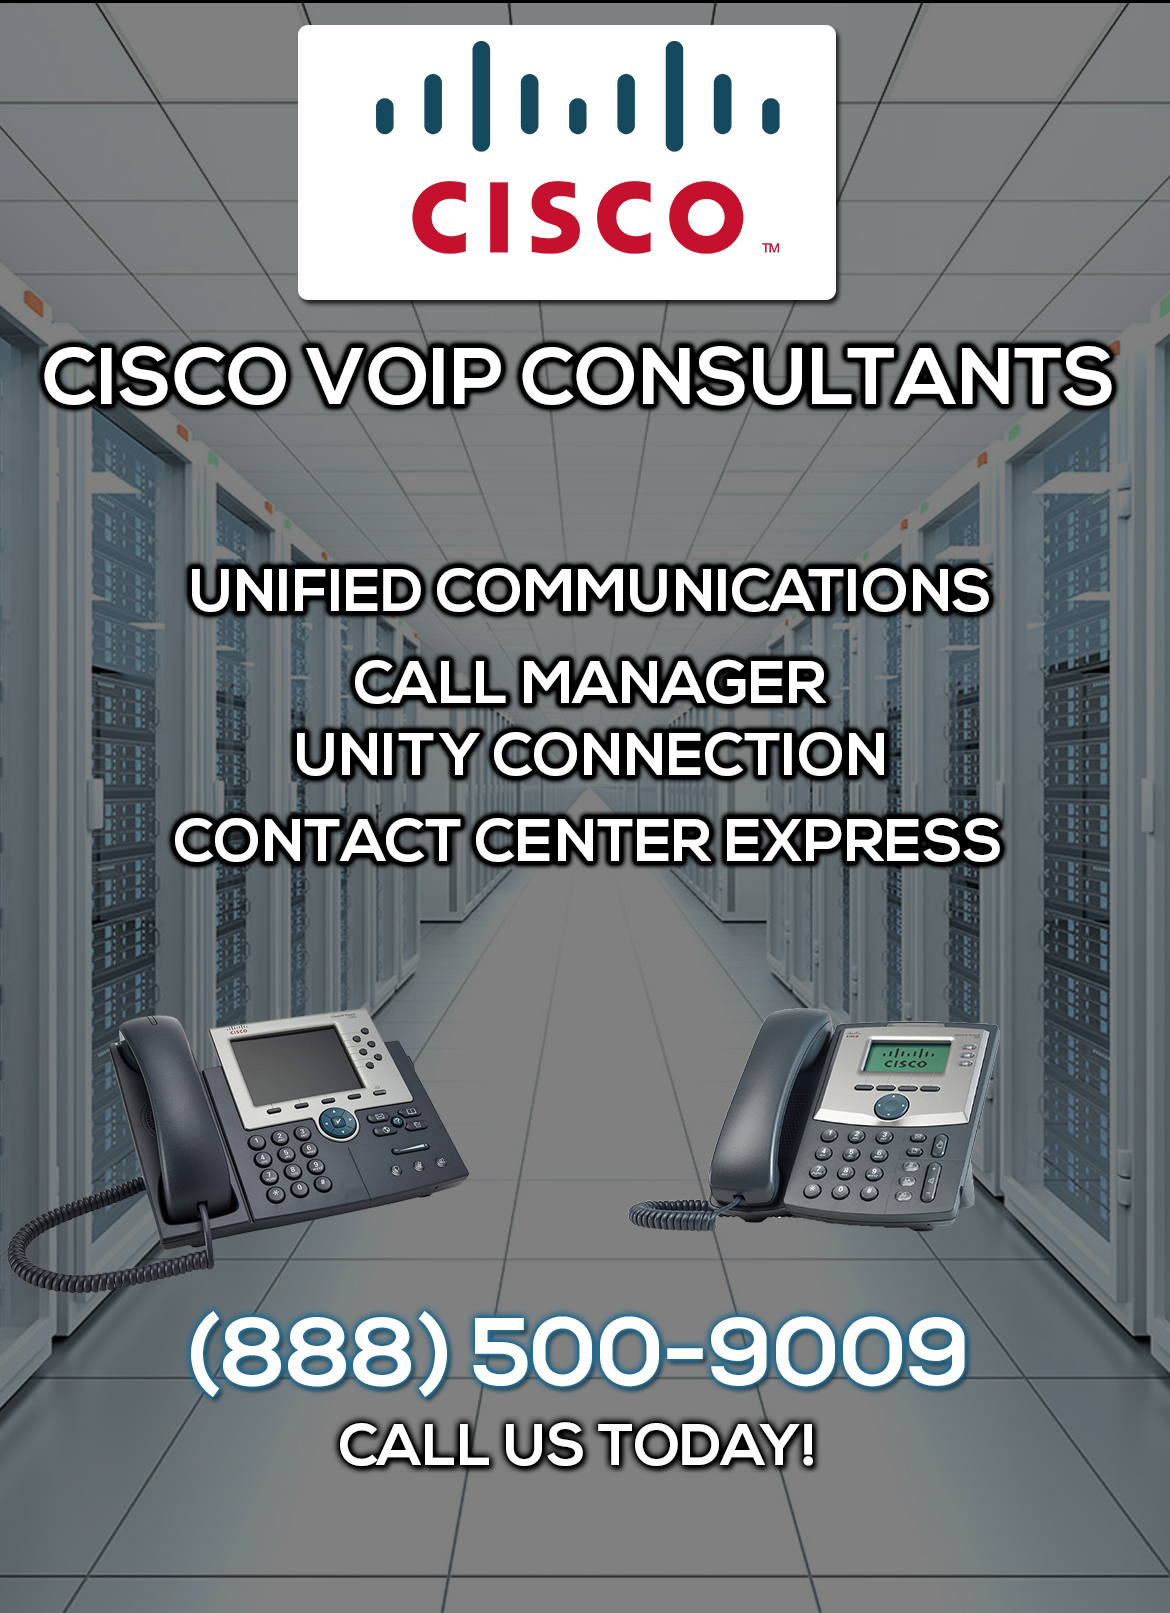 Cisco VoIP Consultants Baldwin Park